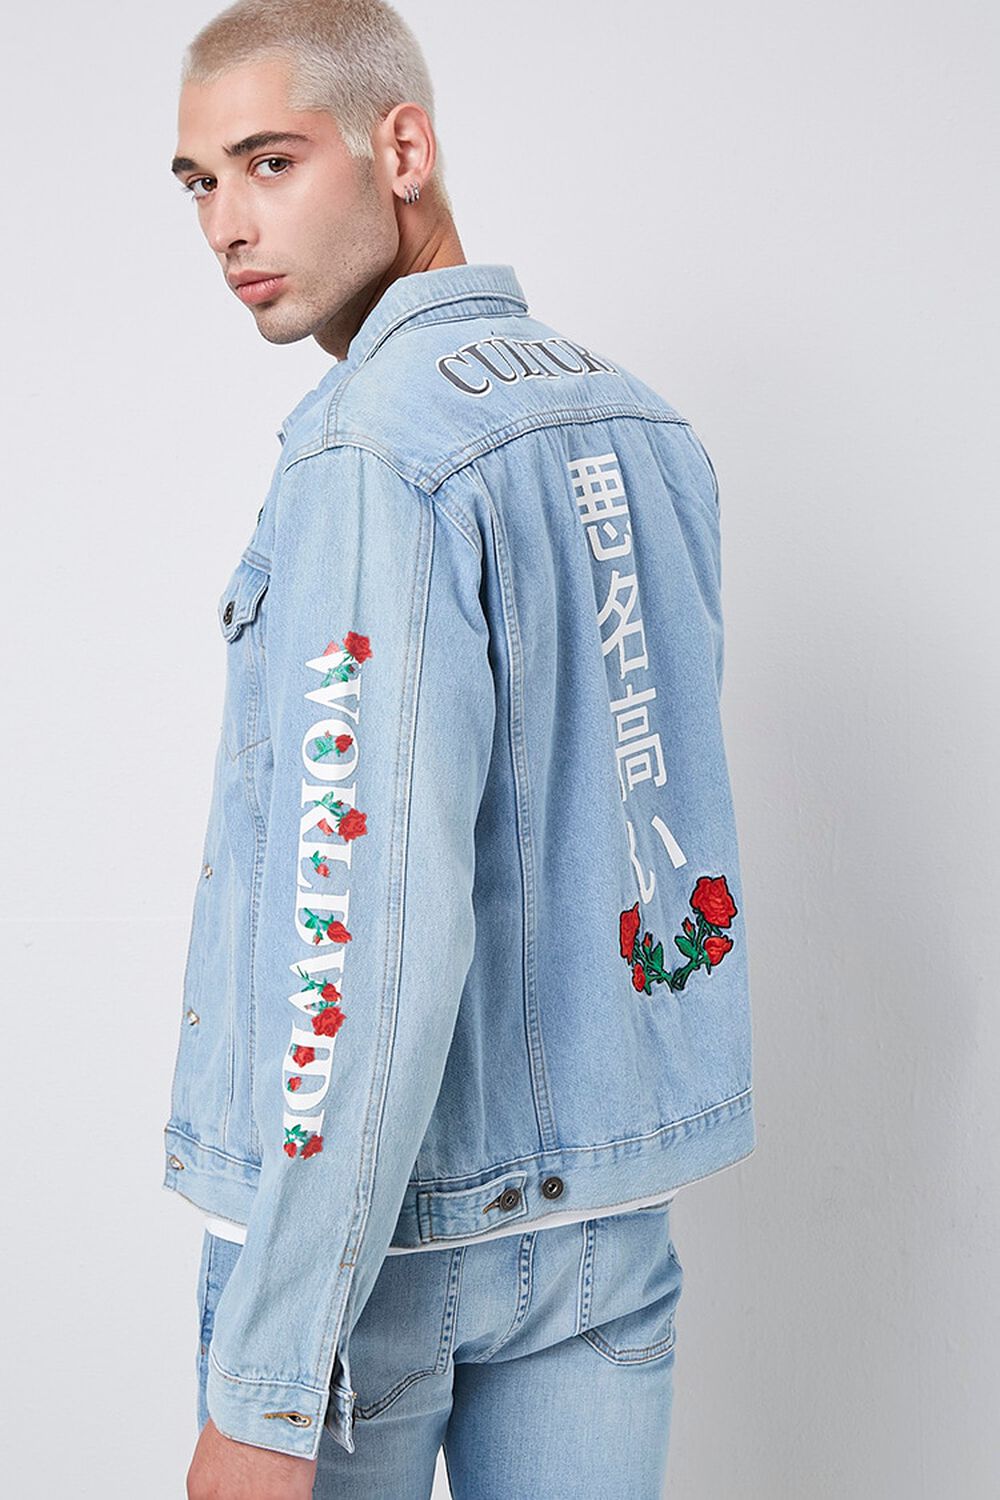 Svinde bort Derive operatør Culture Rose Embroidered Graphic Denim Jacket